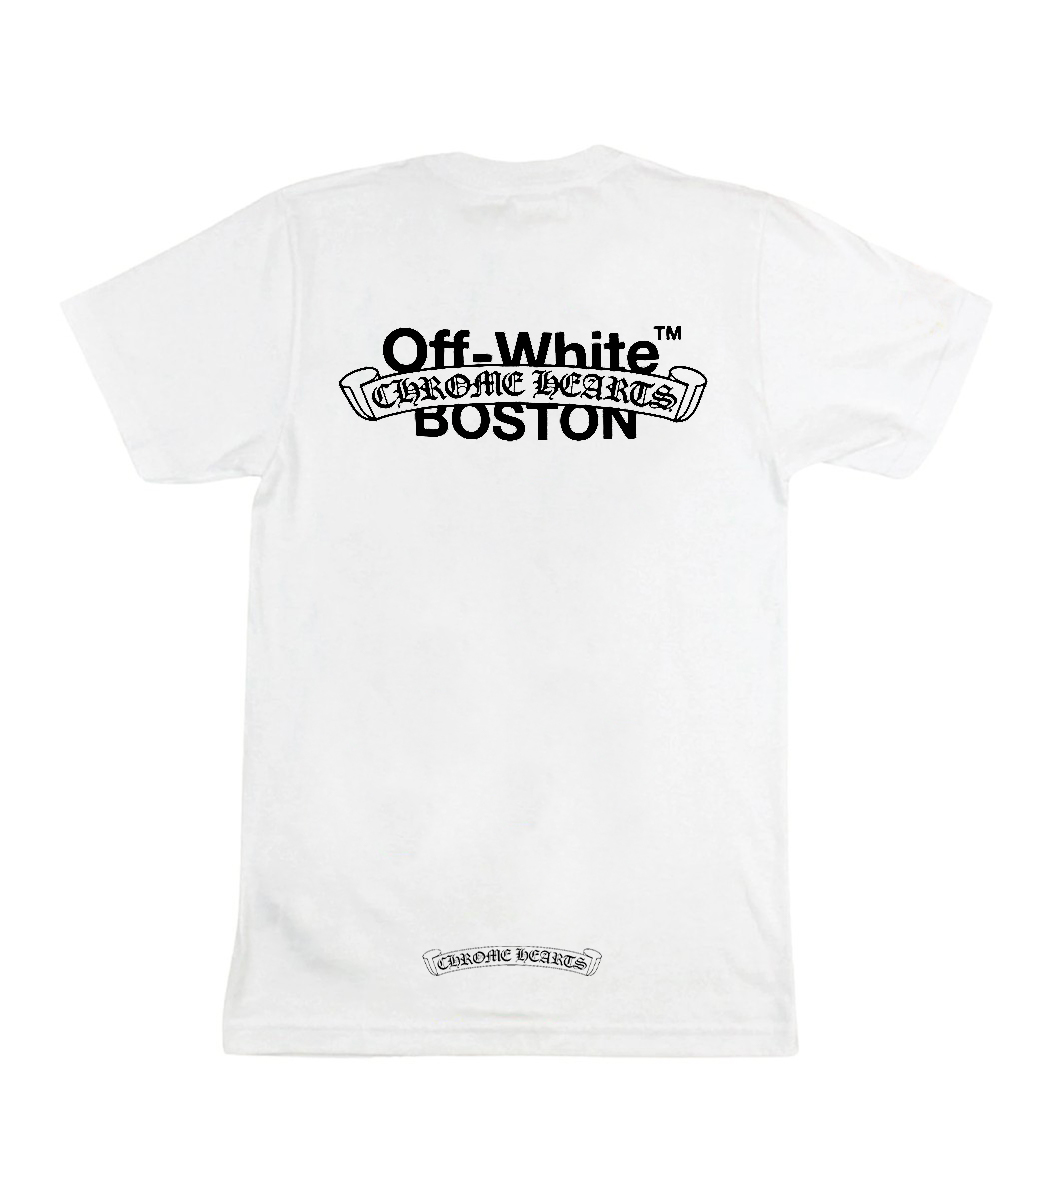 Off-White x Chrome Hearts Boston T-Shirt - Chrome Hearts Clothing 